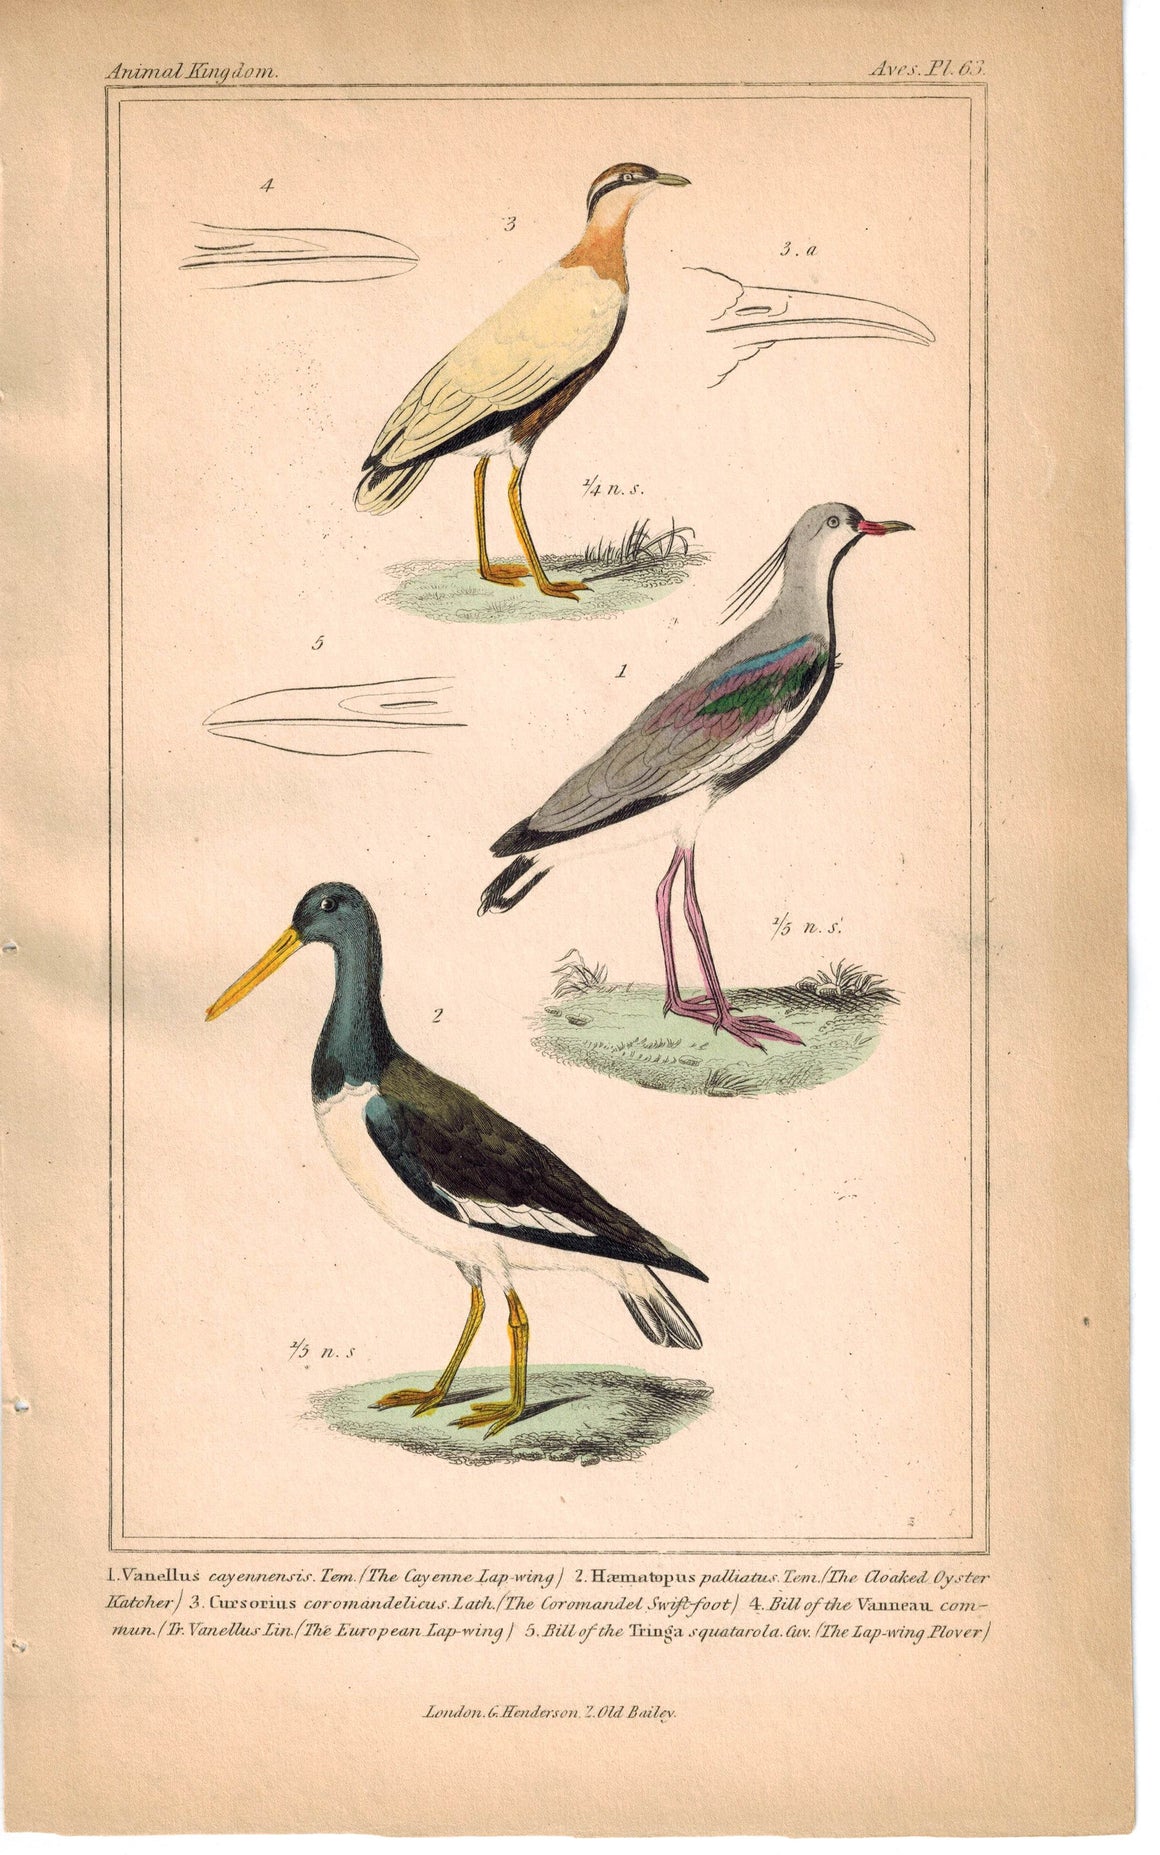 Birds Cayenne Lapwing Cloaked Oystercatcher & Coromandel Swift-foot Cuvier Print